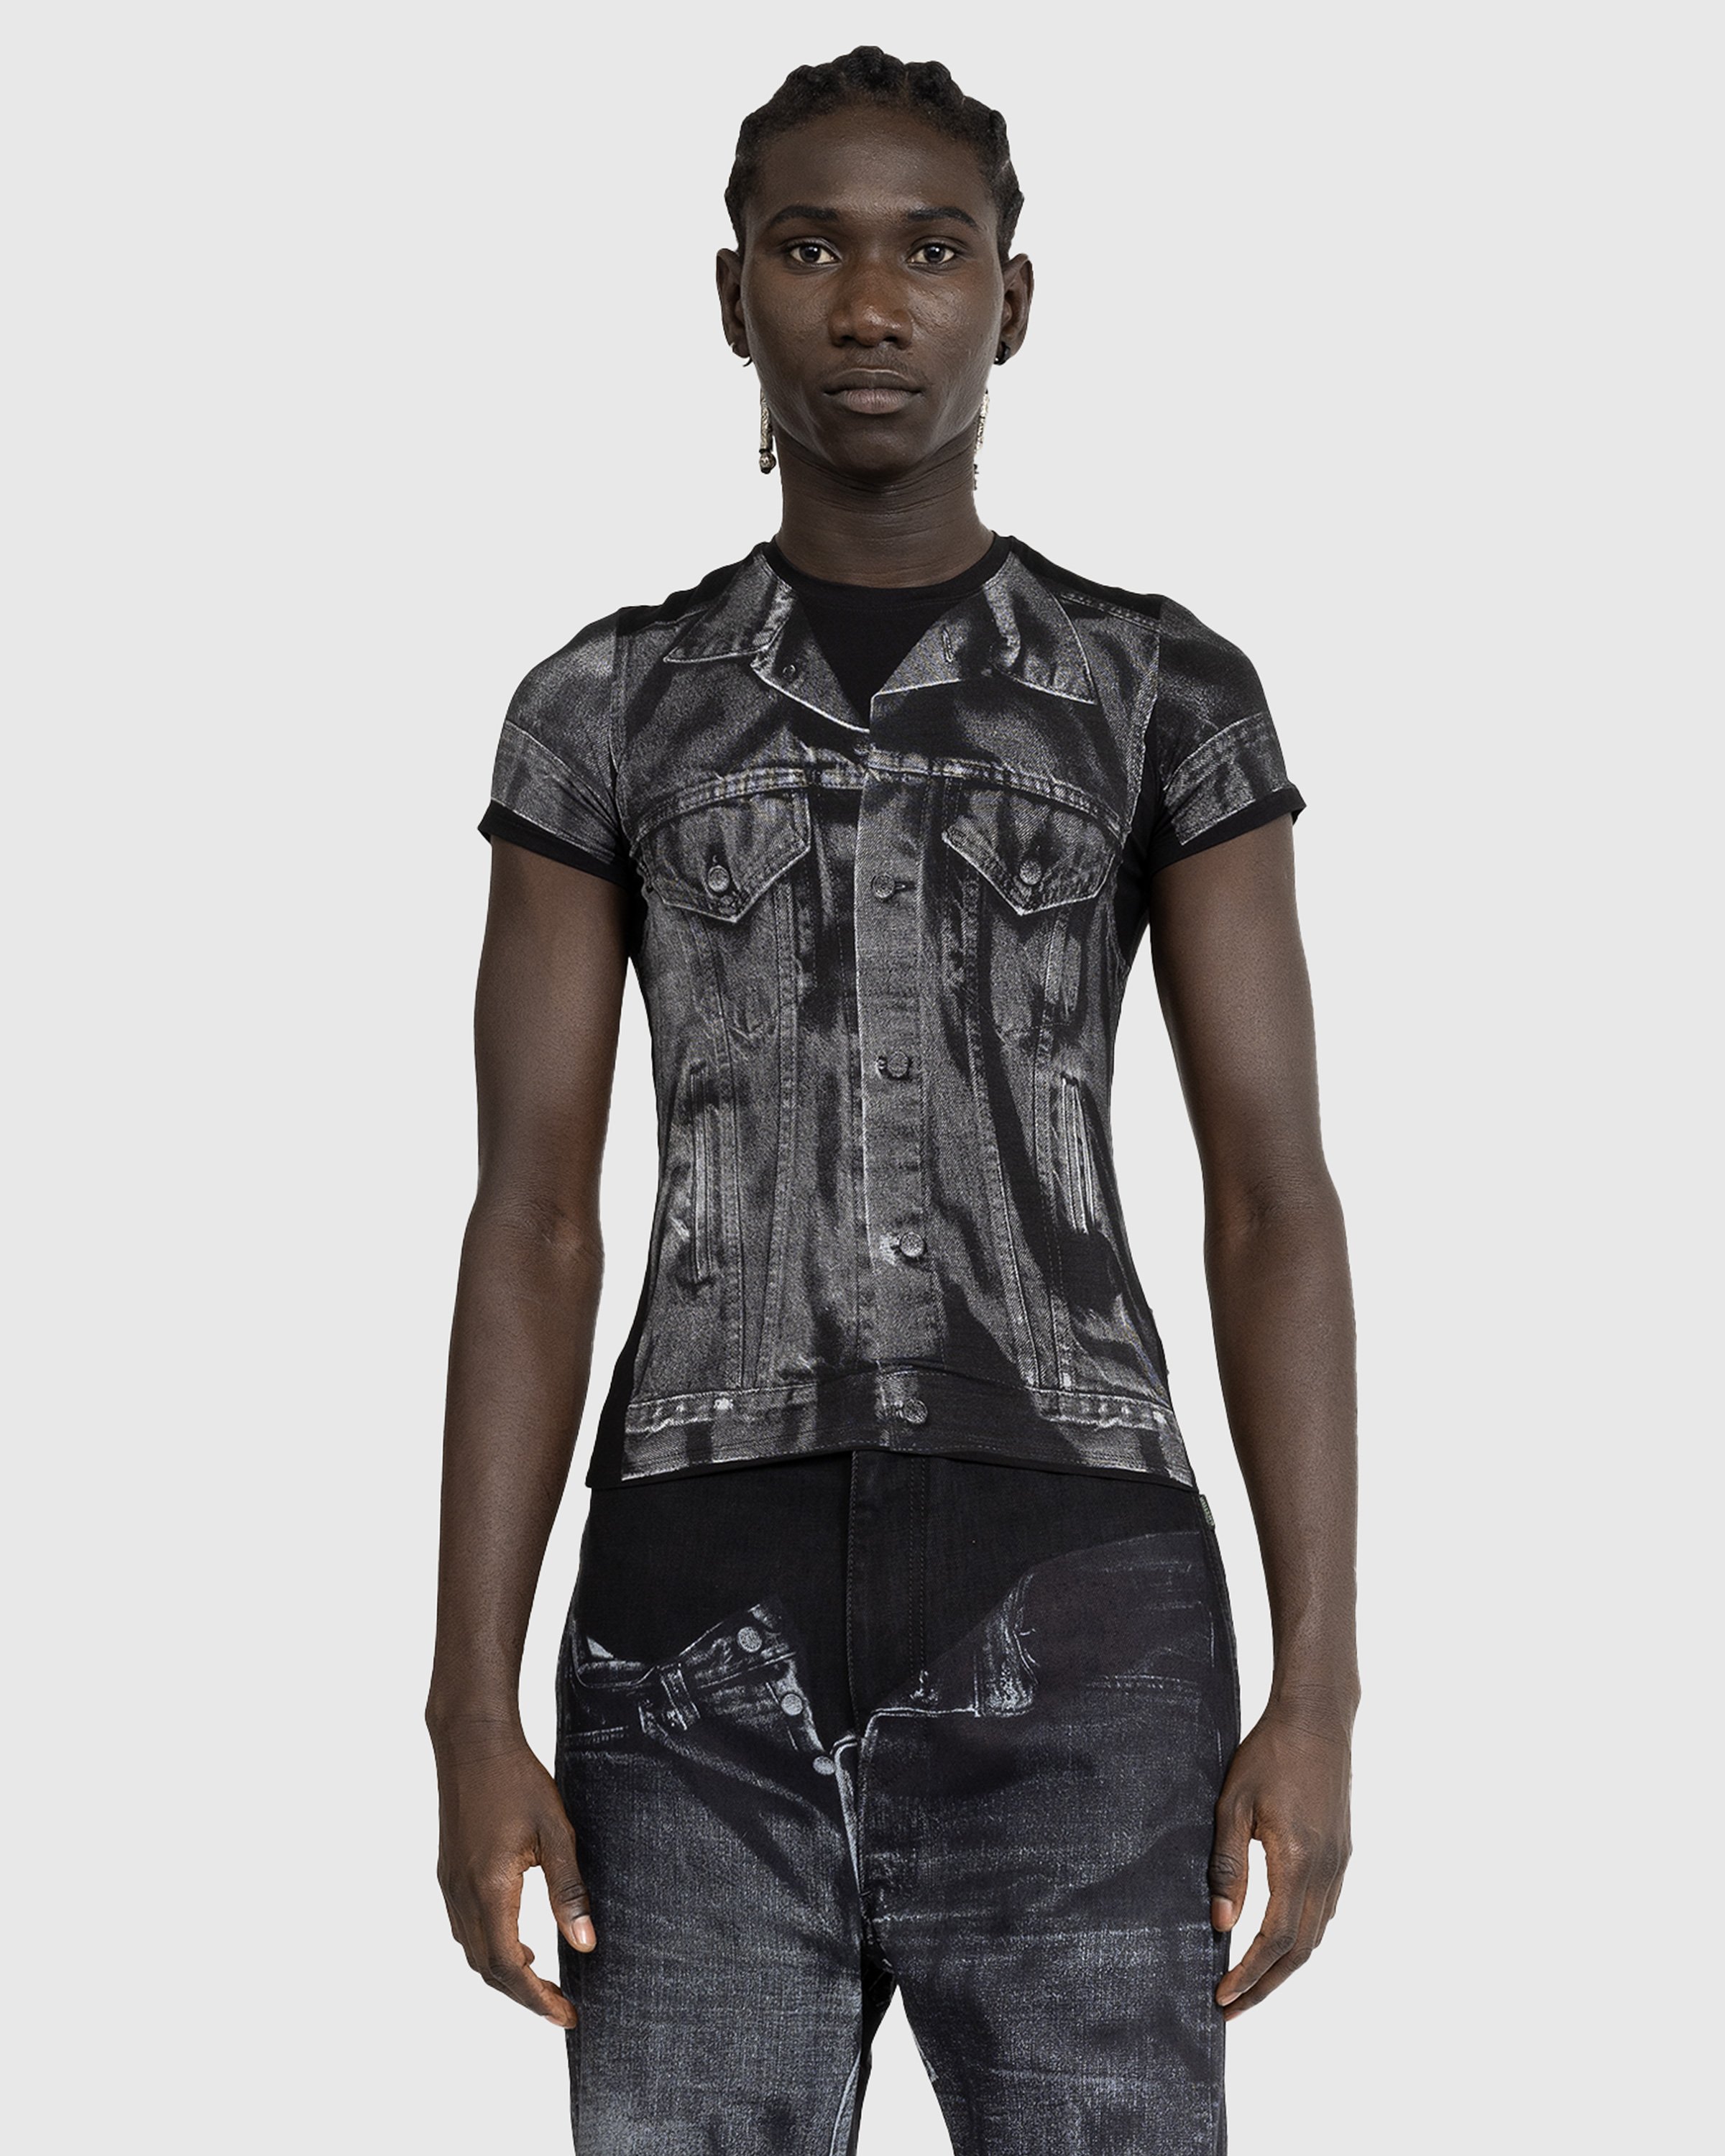 Jean Paul Gaultier - Denim Trompe L'oeil T-Shirt Black/Gray - Clothing - Black - Image 2